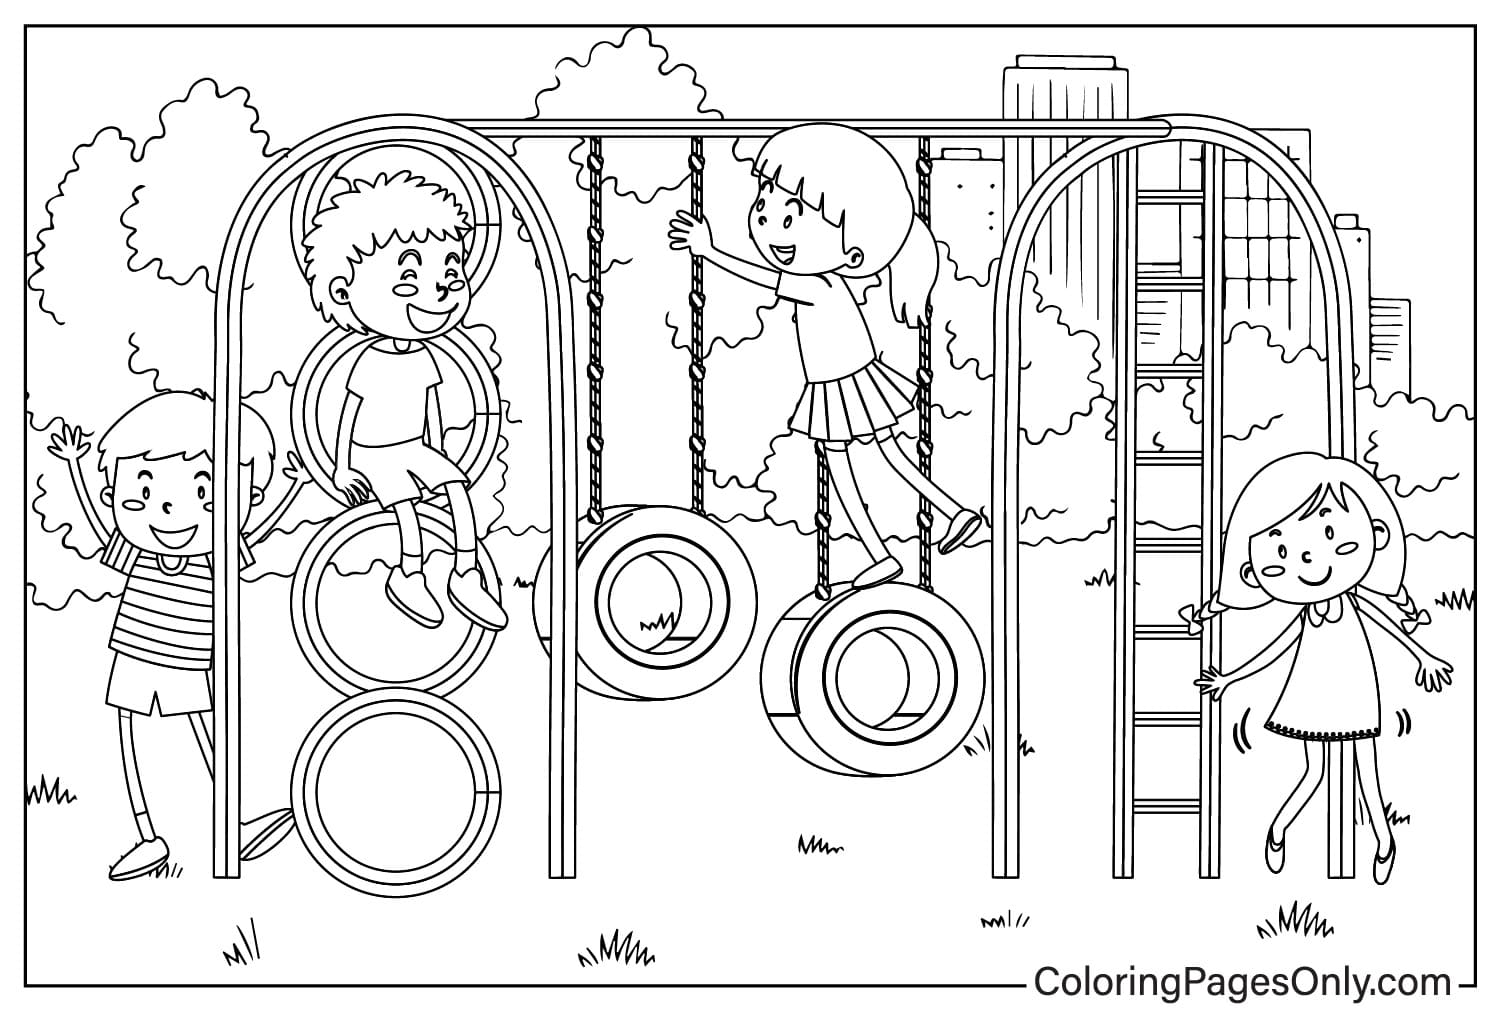 Imagens para colorir do Playground do Playground